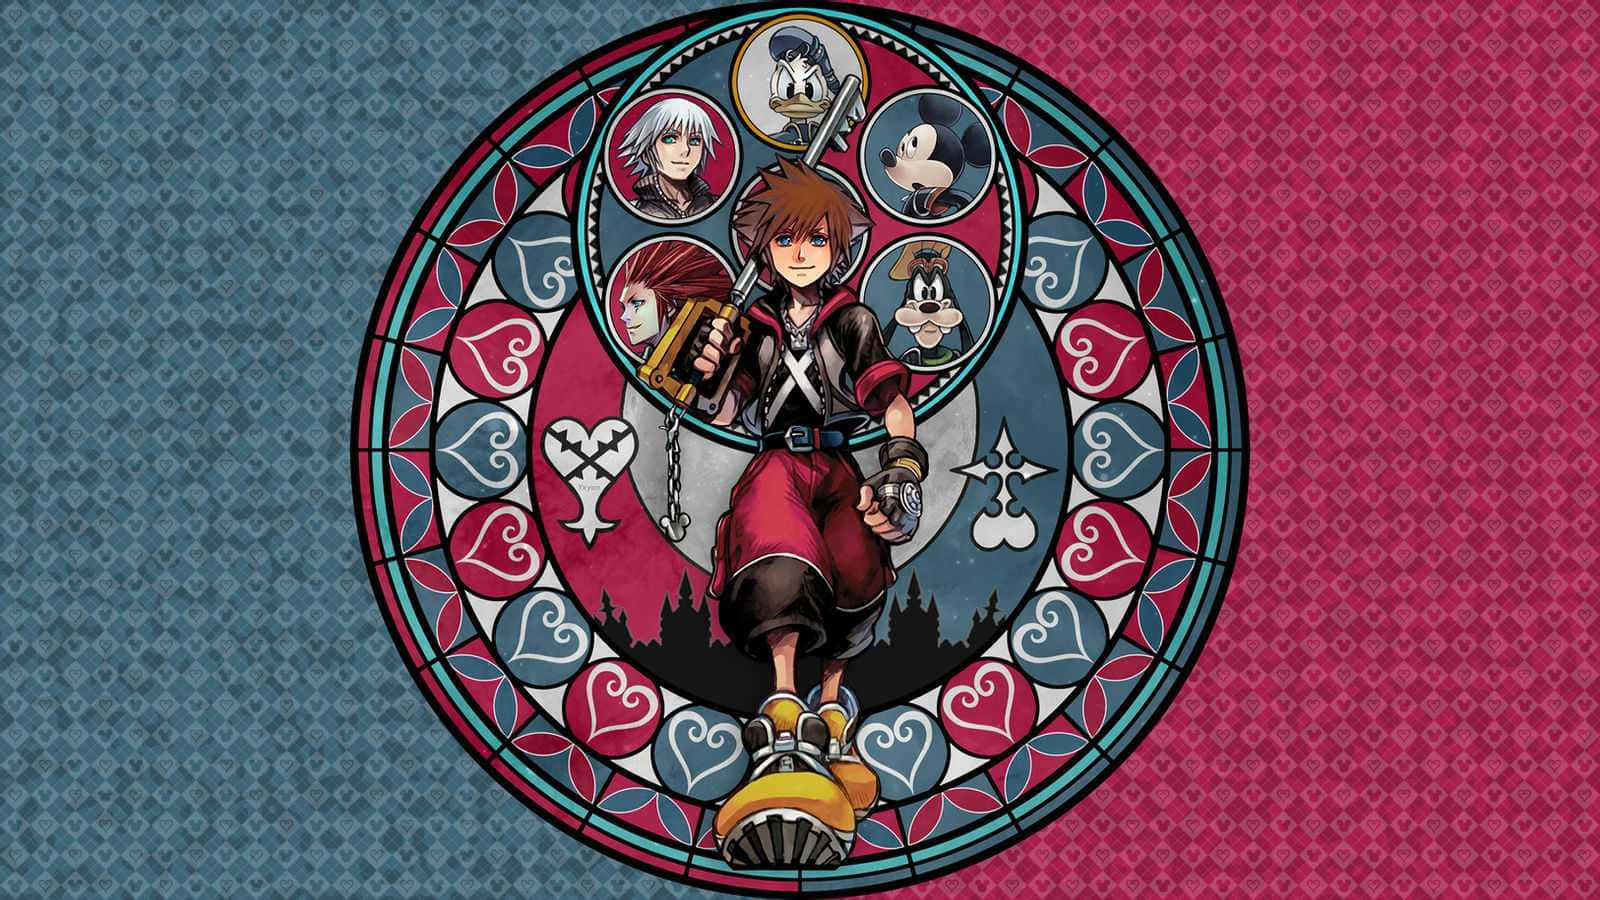 Batallaépica - Kingdom Hearts